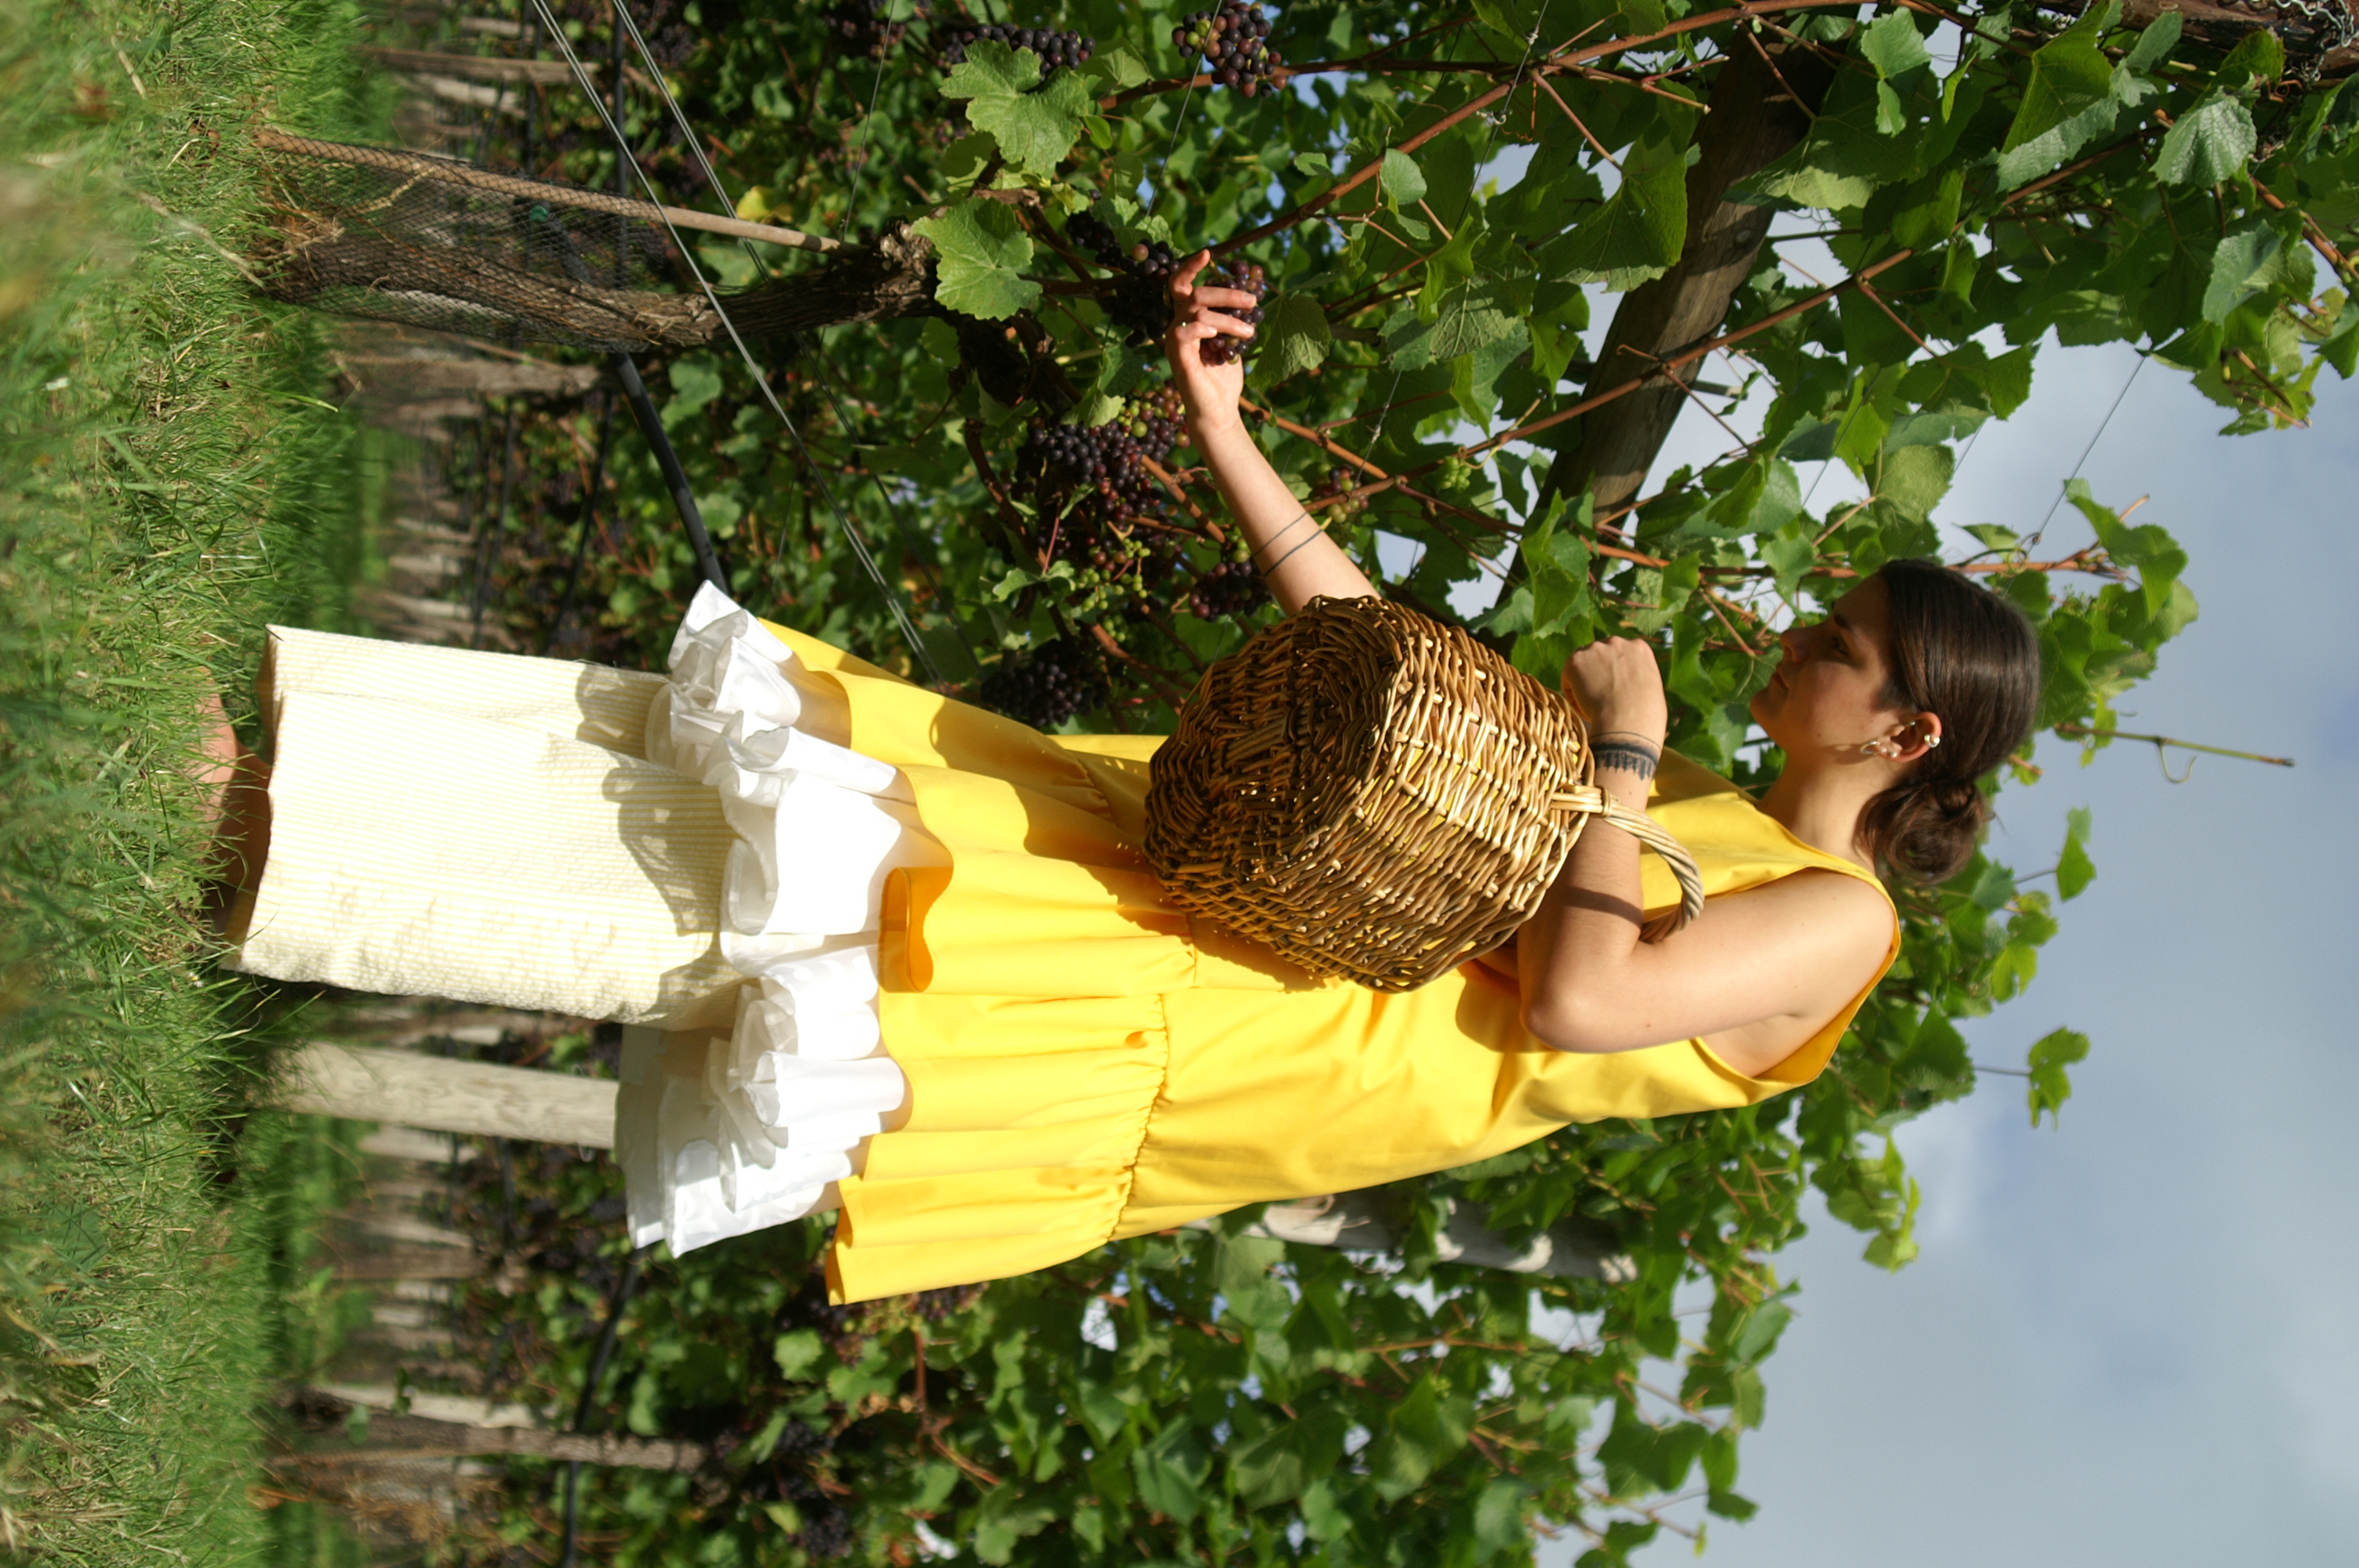 Miranda in the yellow Sunny Dress